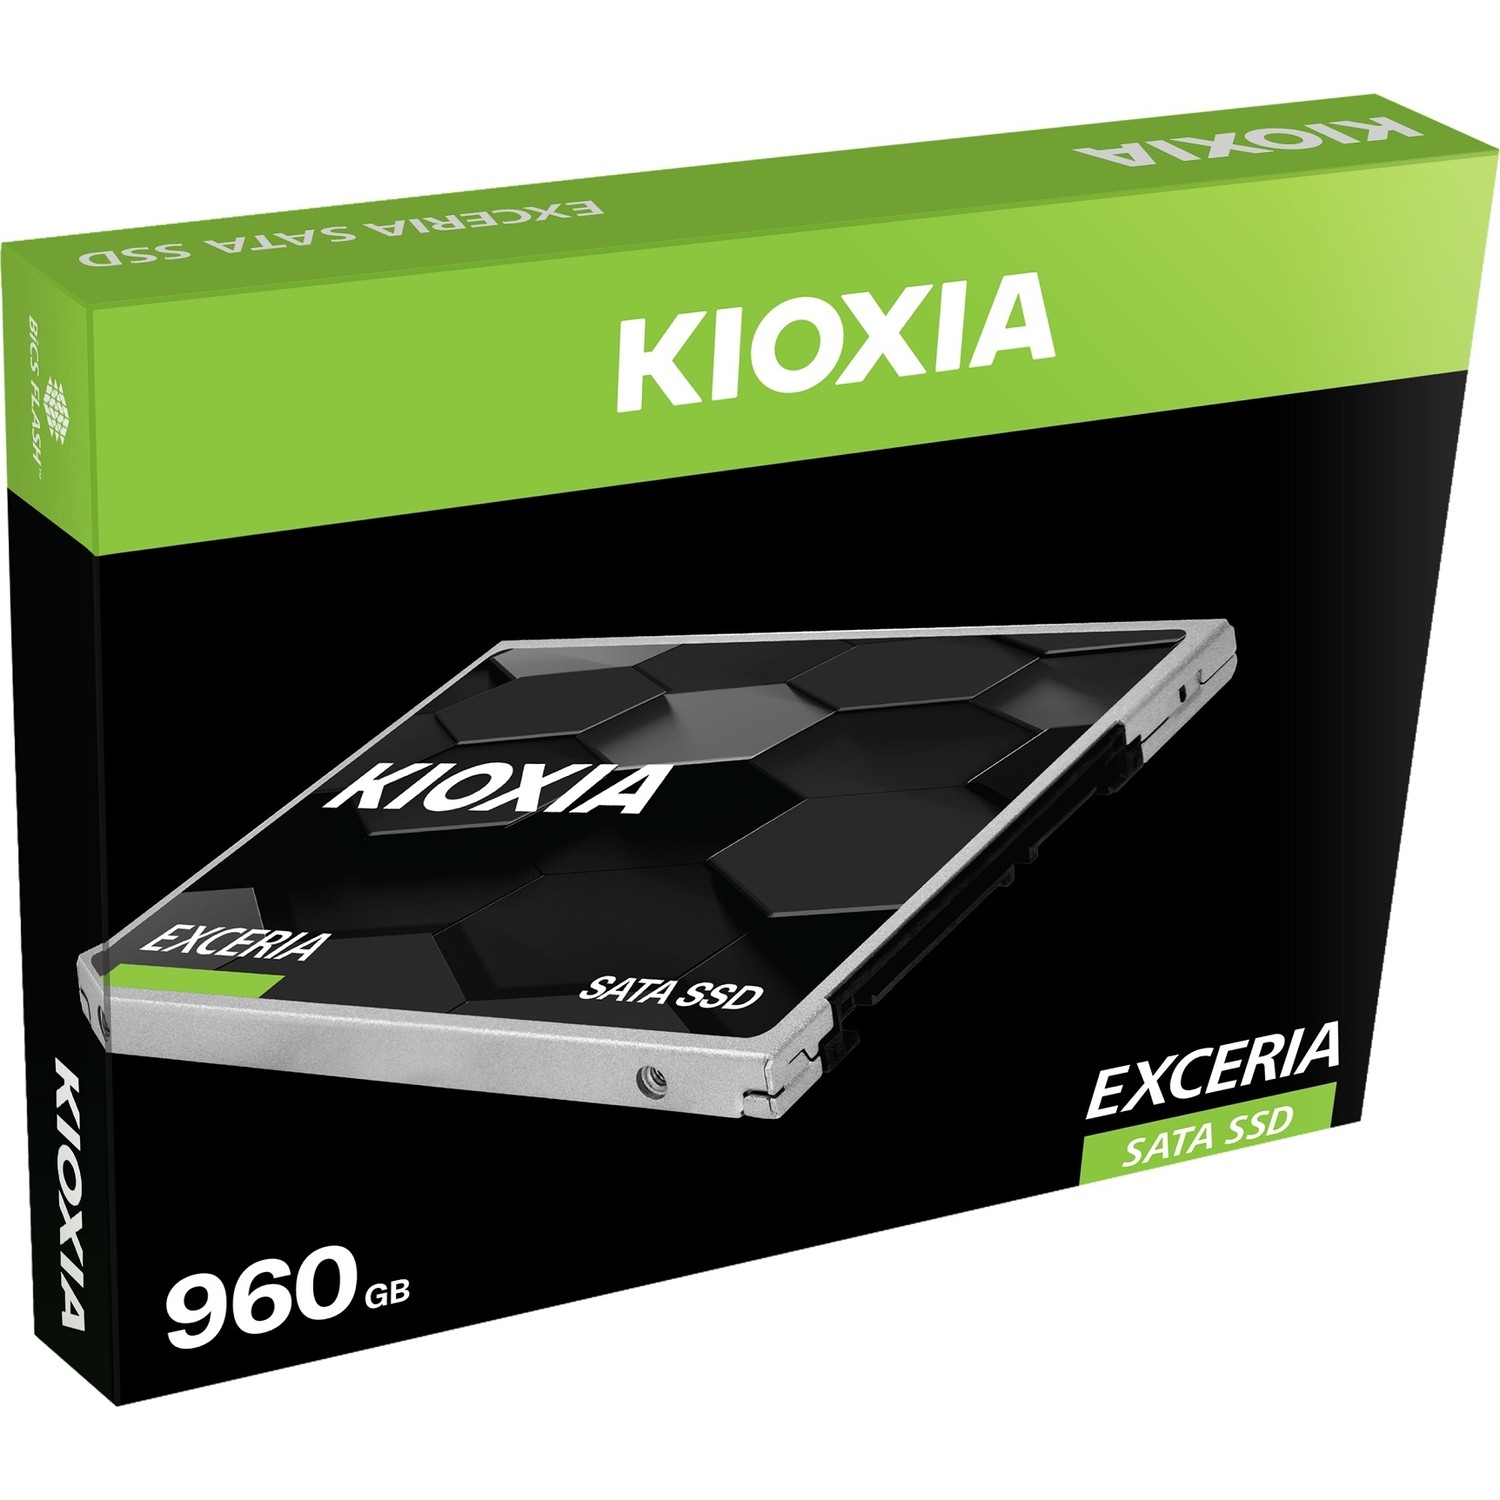 KIOXIA 960 GB Exceria LTC10Z960GG8 2.5" Sata 3.0 SSD